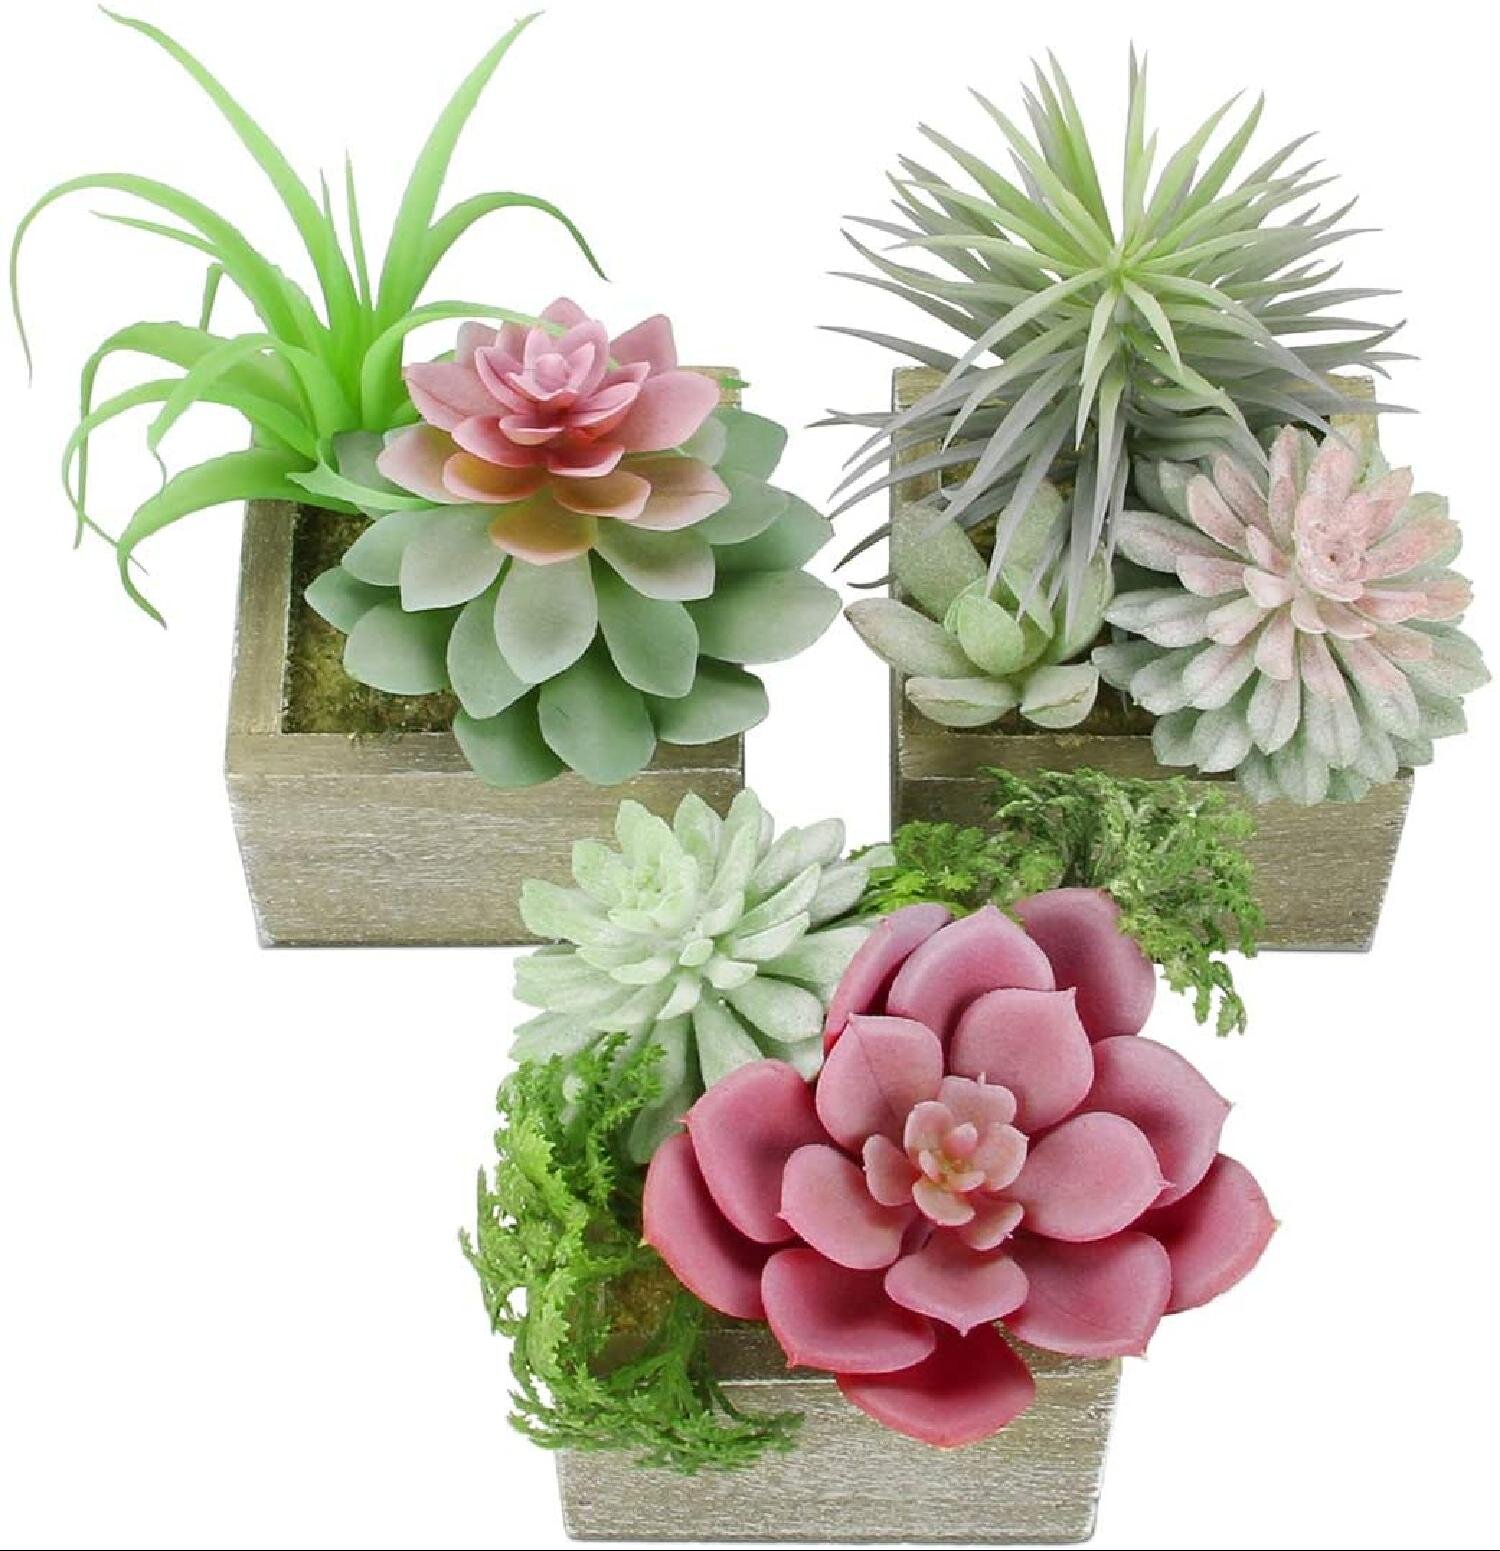 Green Artificial Plant Plastic Garden Succulent Air Home Wedding Bouquet 1#-5#